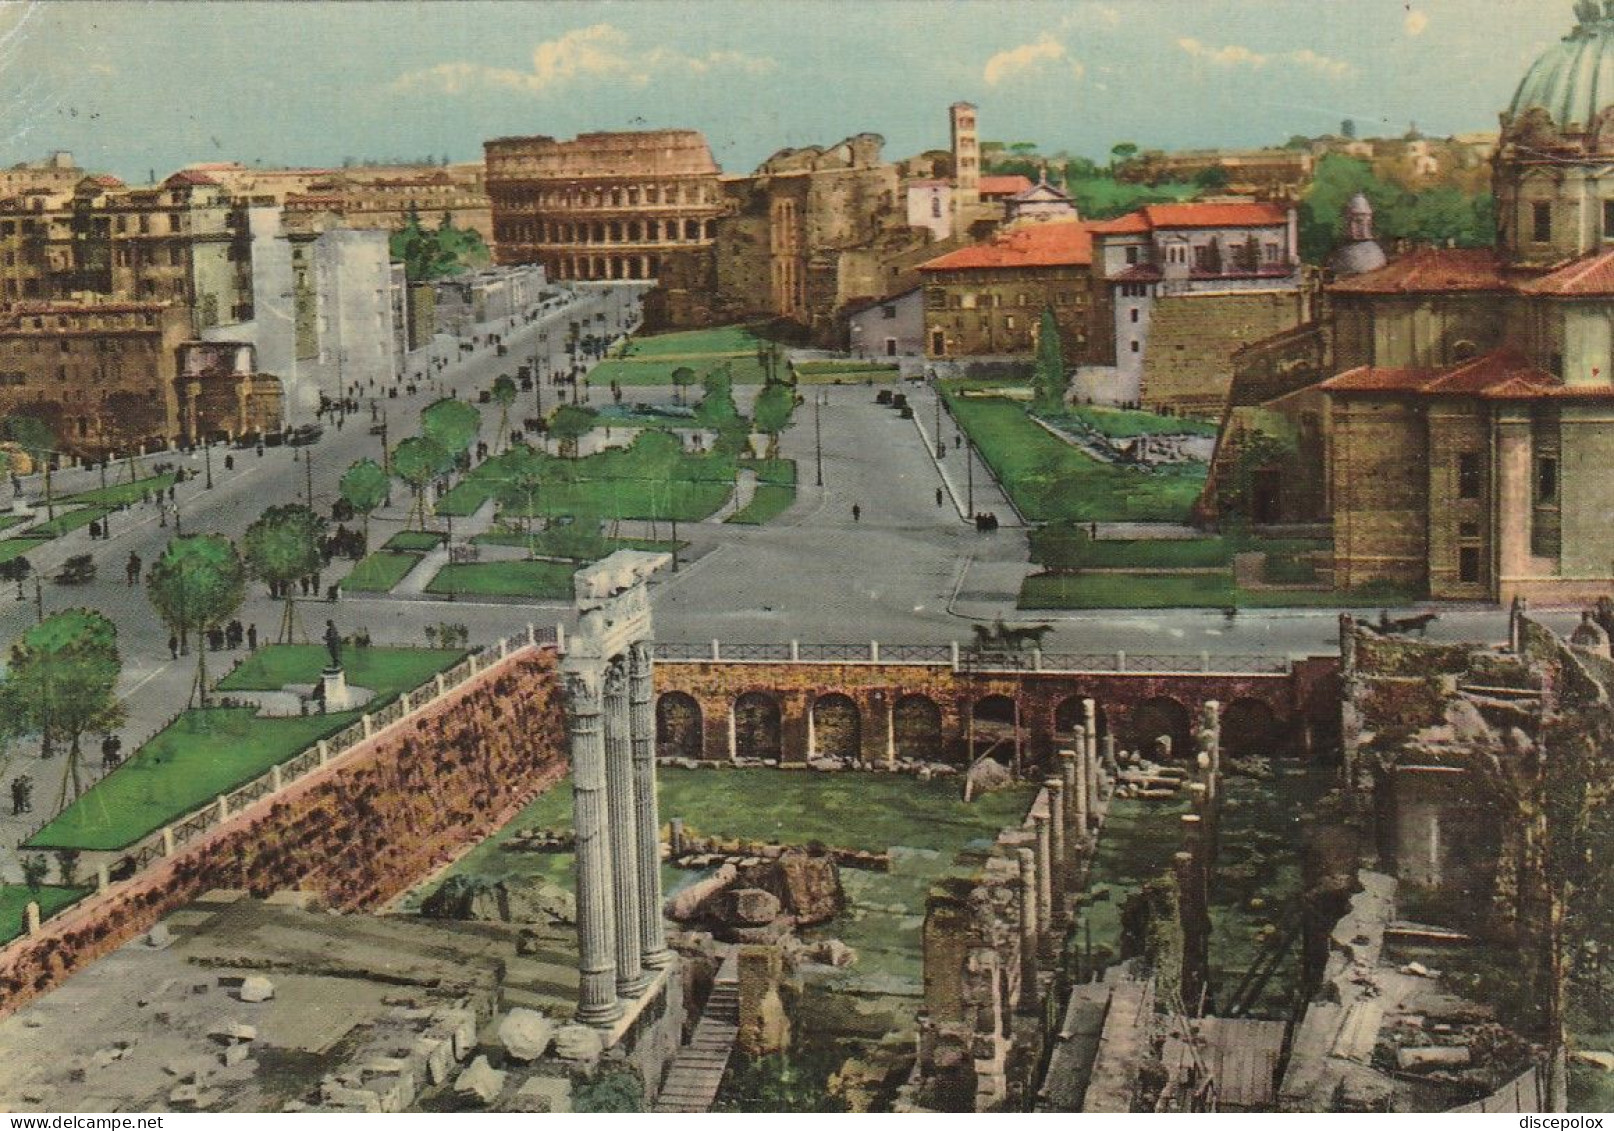 N3618 Roma - Foro Romano E Via Dei Fori Imperiali / Viaggiata 1961 - Panoramische Zichten, Meerdere Zichten